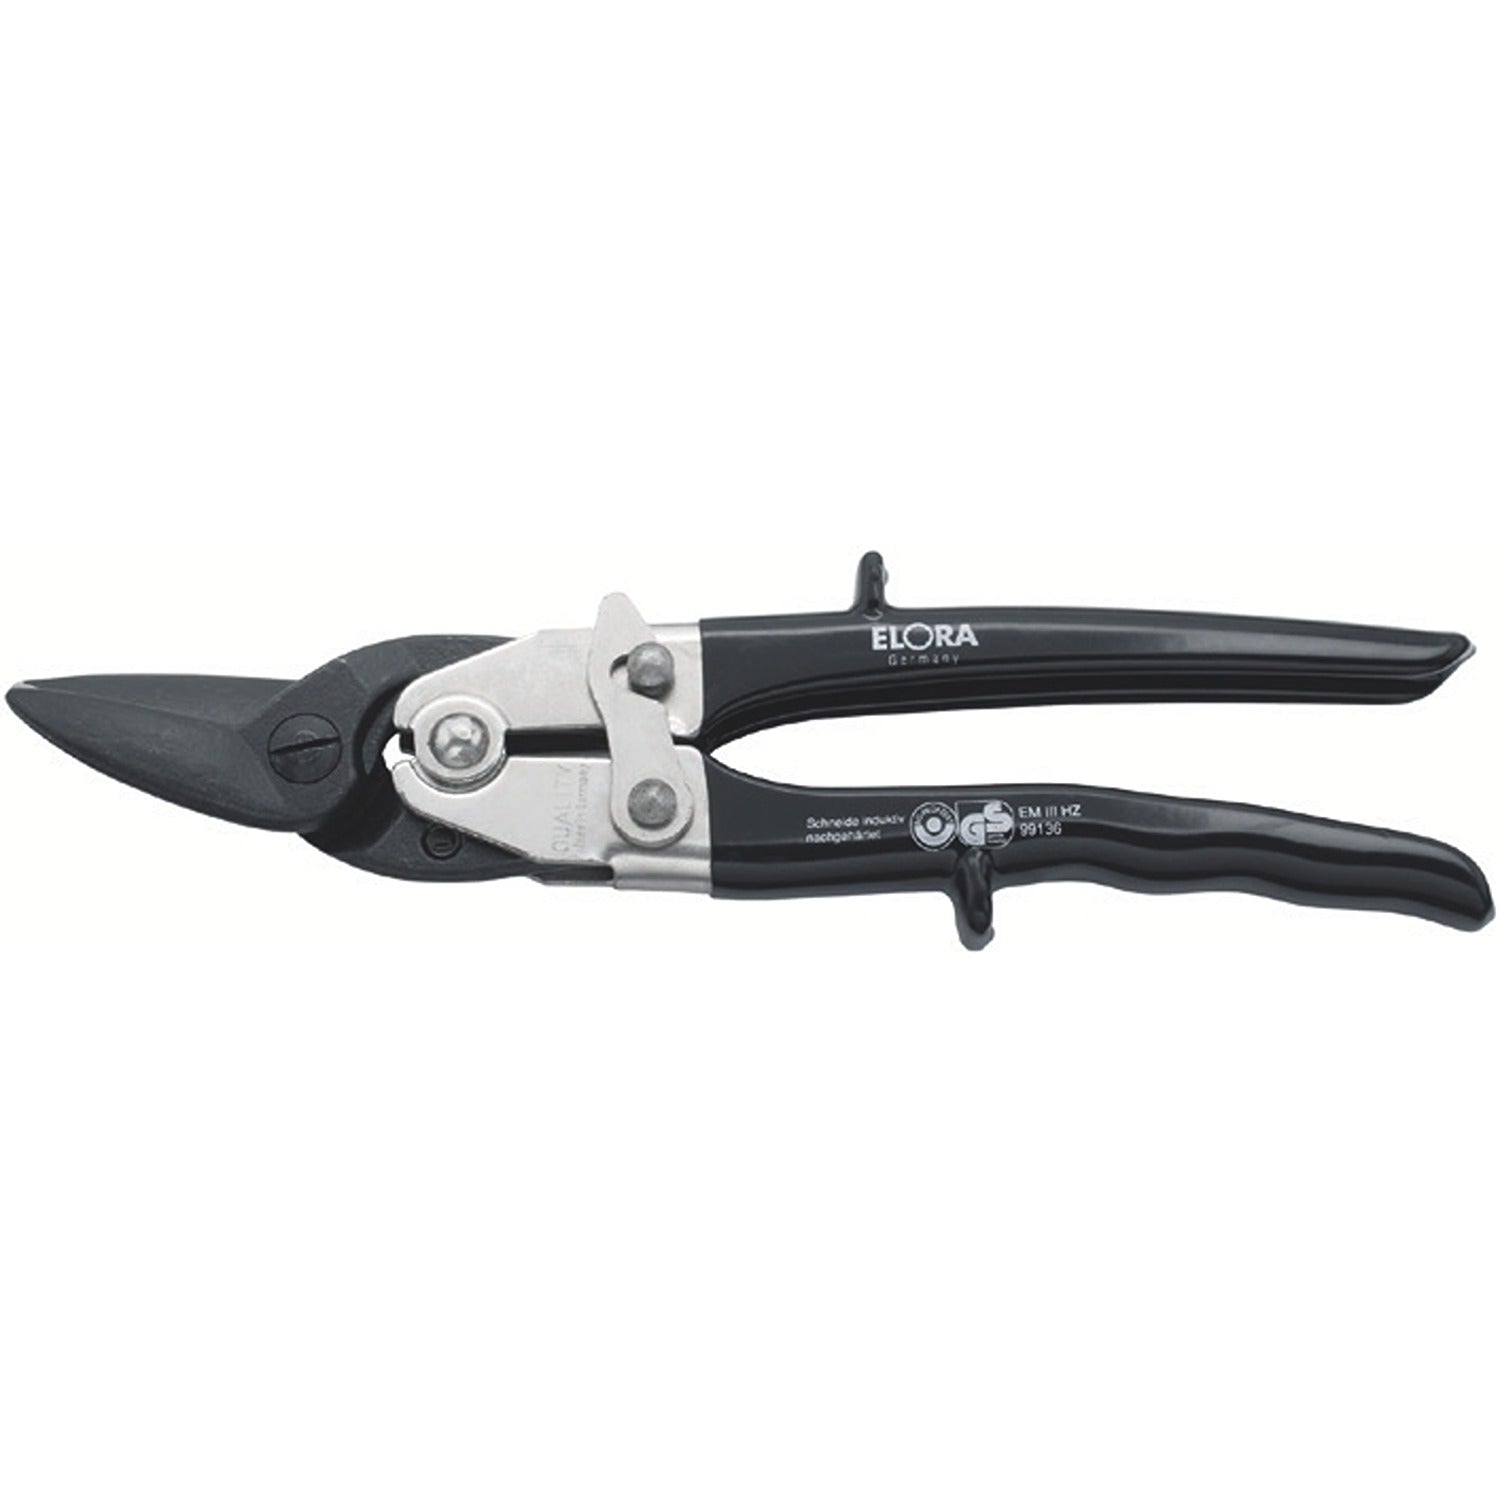 ELORA 483R Shape Cutting Lever Tin Snip (ELORA Tools) - Premium Shape Cutting from ELORA - Shop now at Yew Aik.